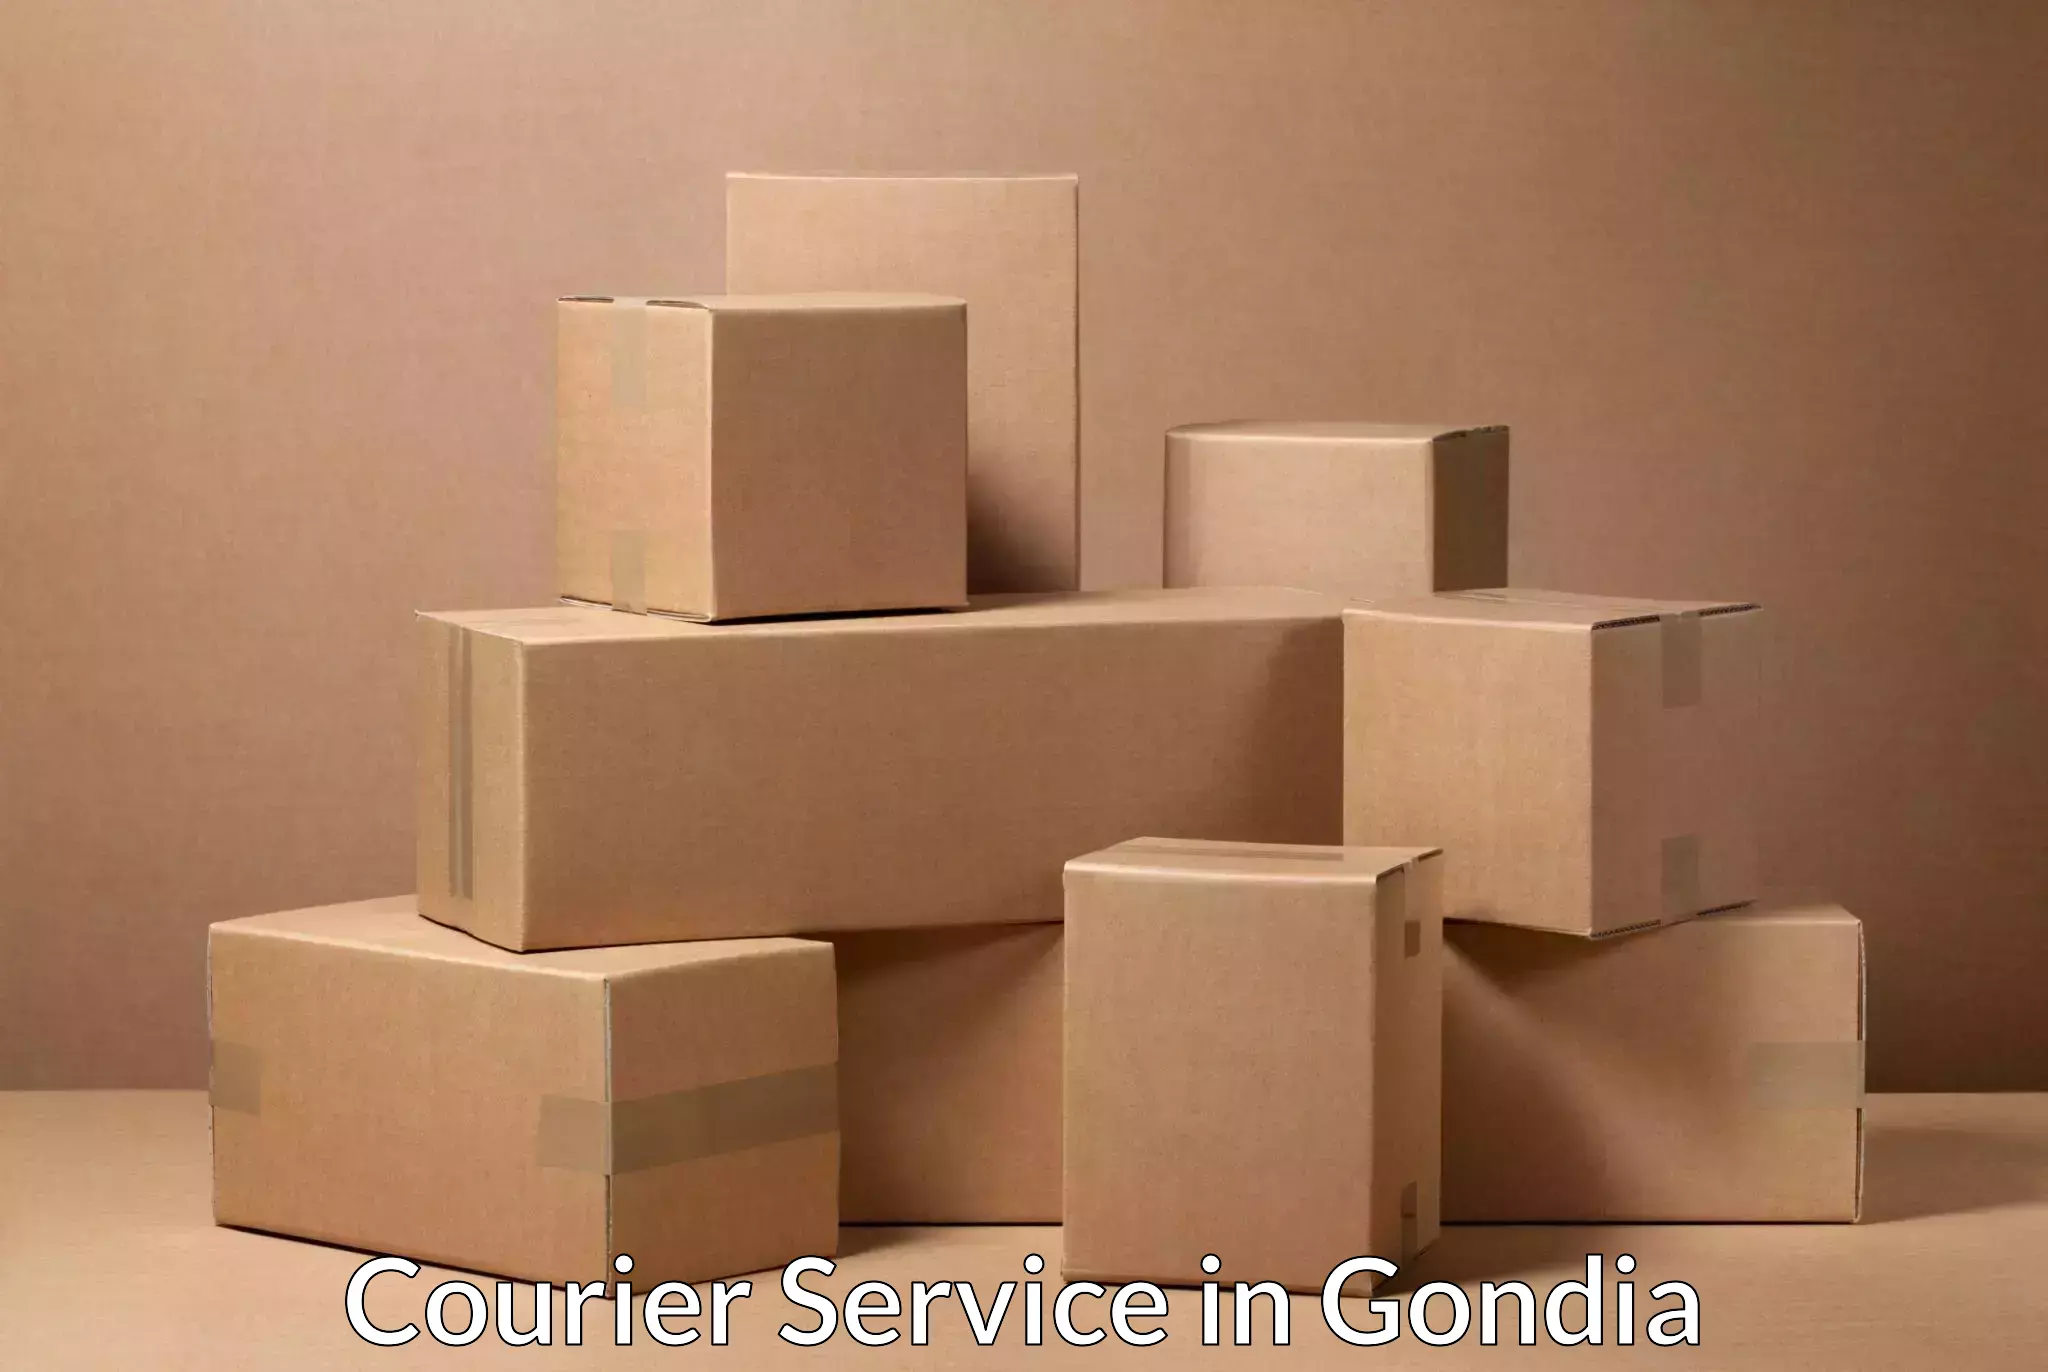 Efficient order fulfillment in Gondia